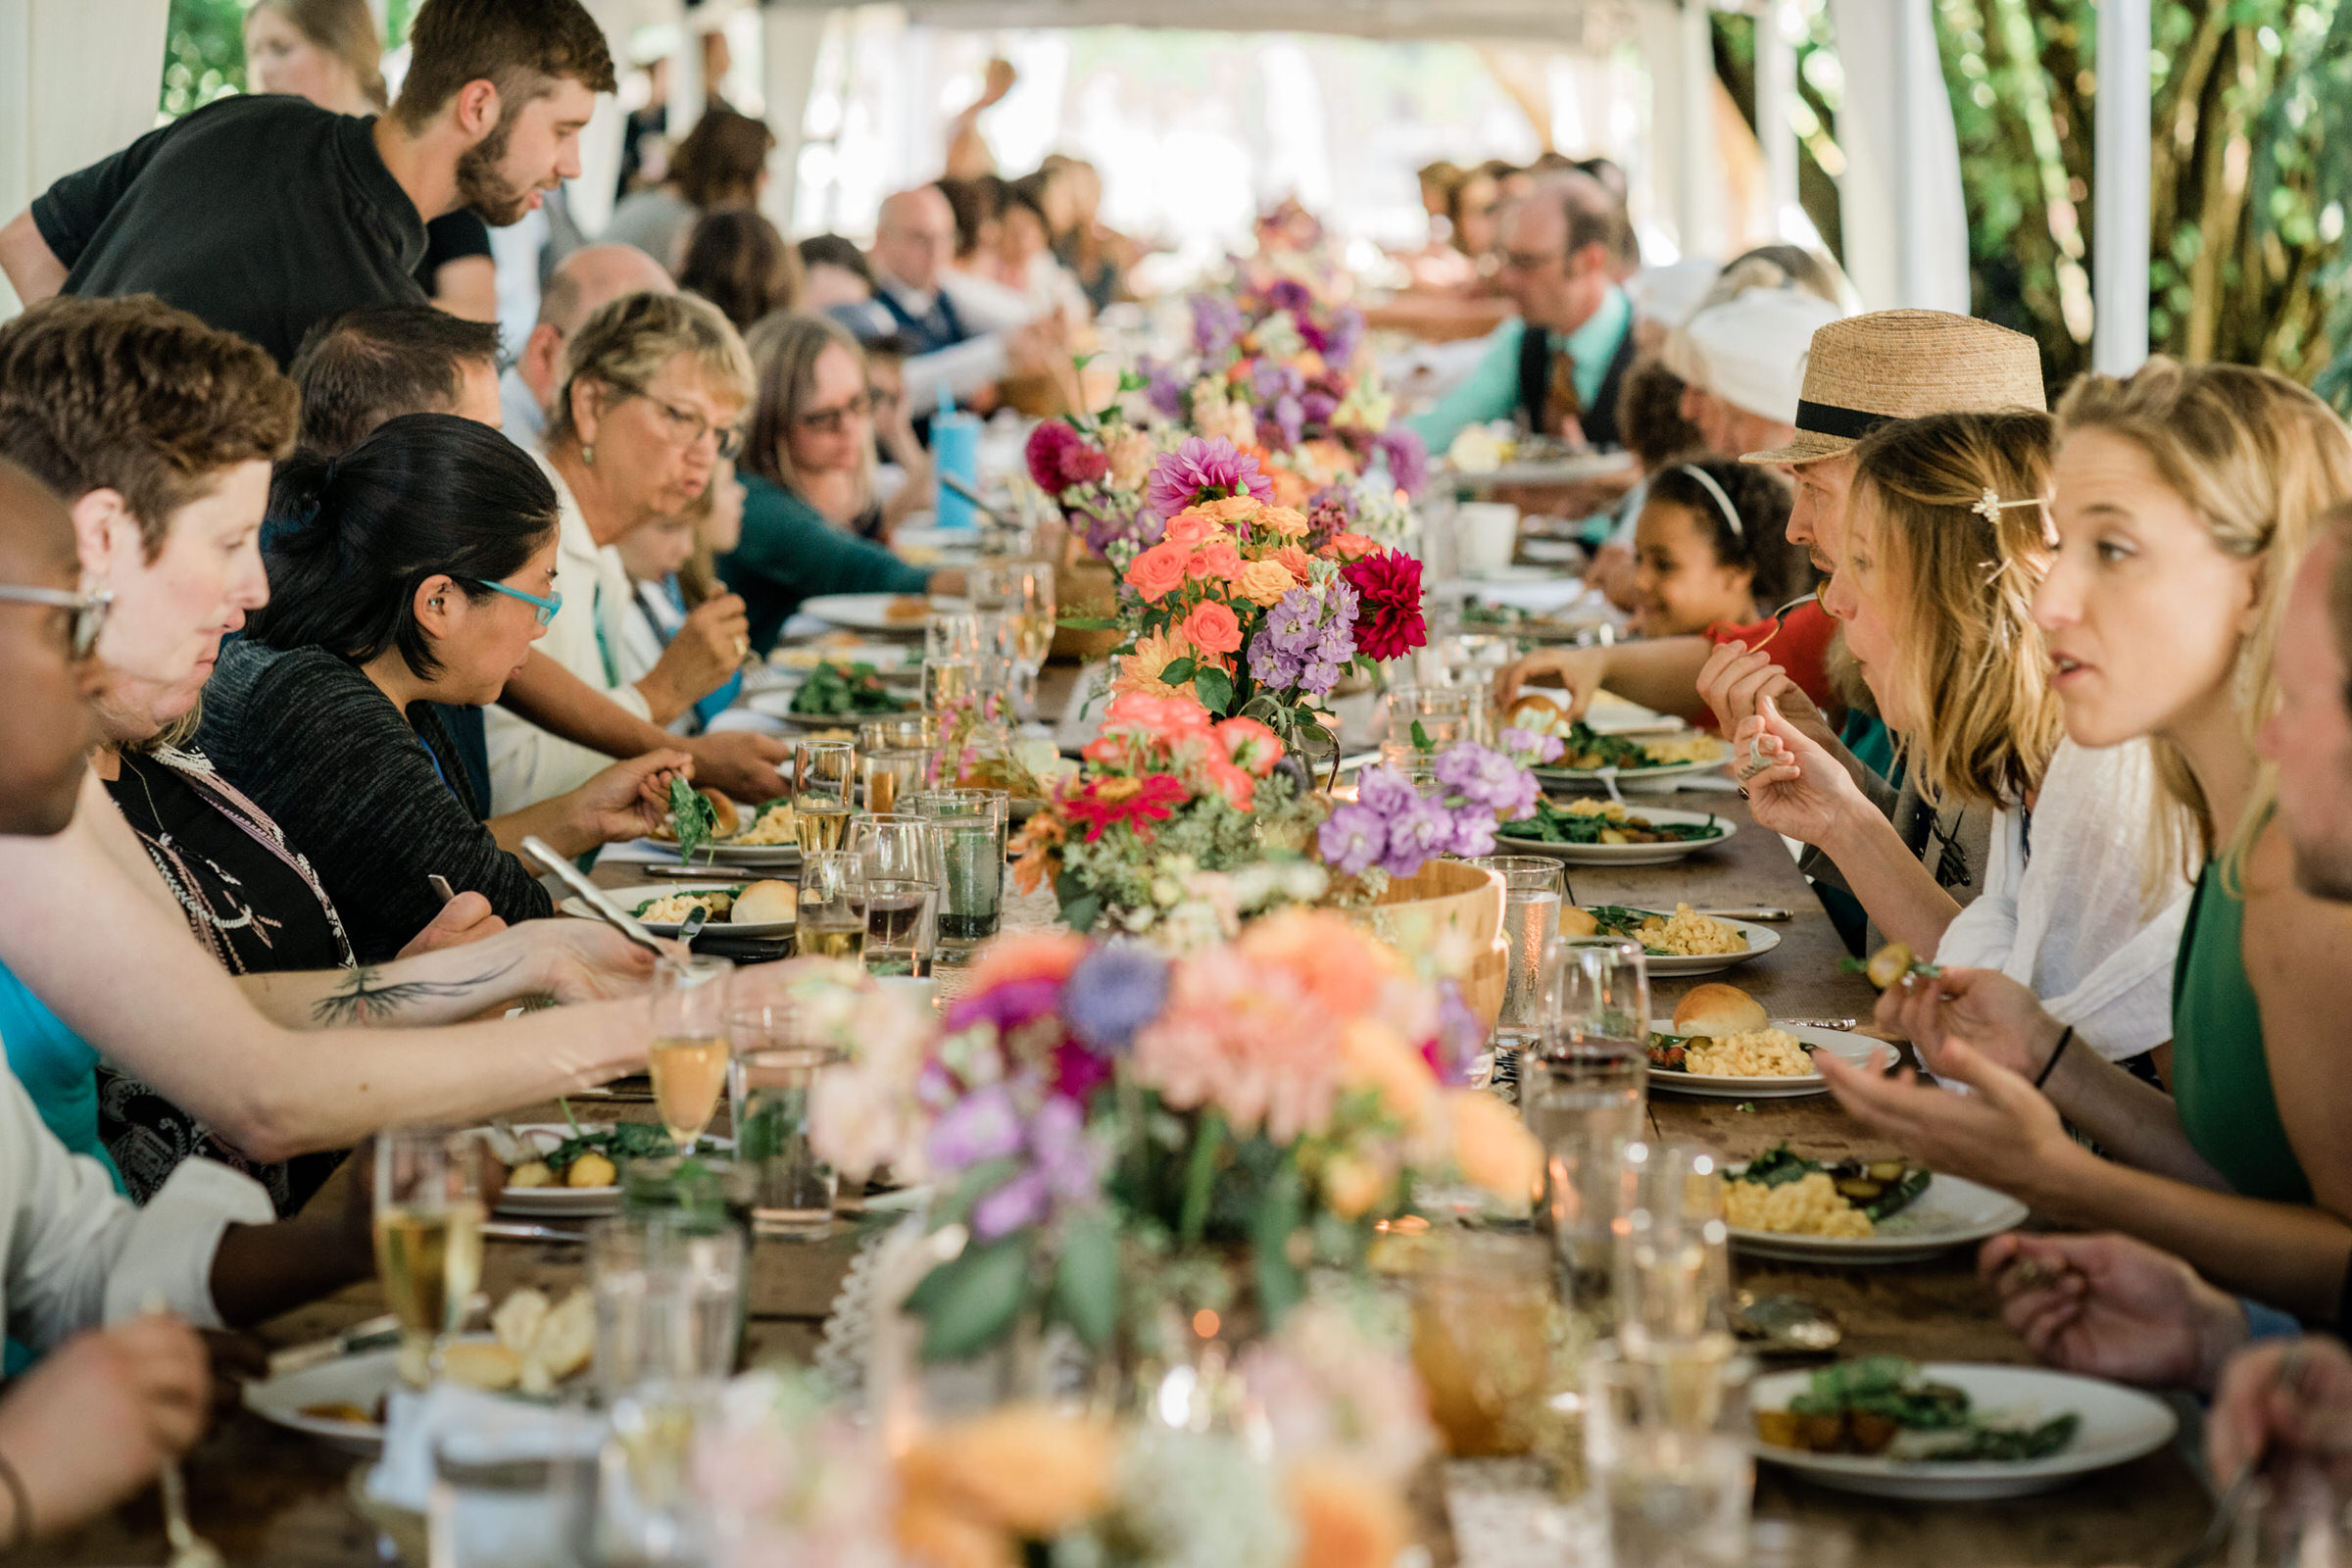 Wayfarer Whidbey Island Wedding: Wedding guests enjoying the sumptuous food at a wedding